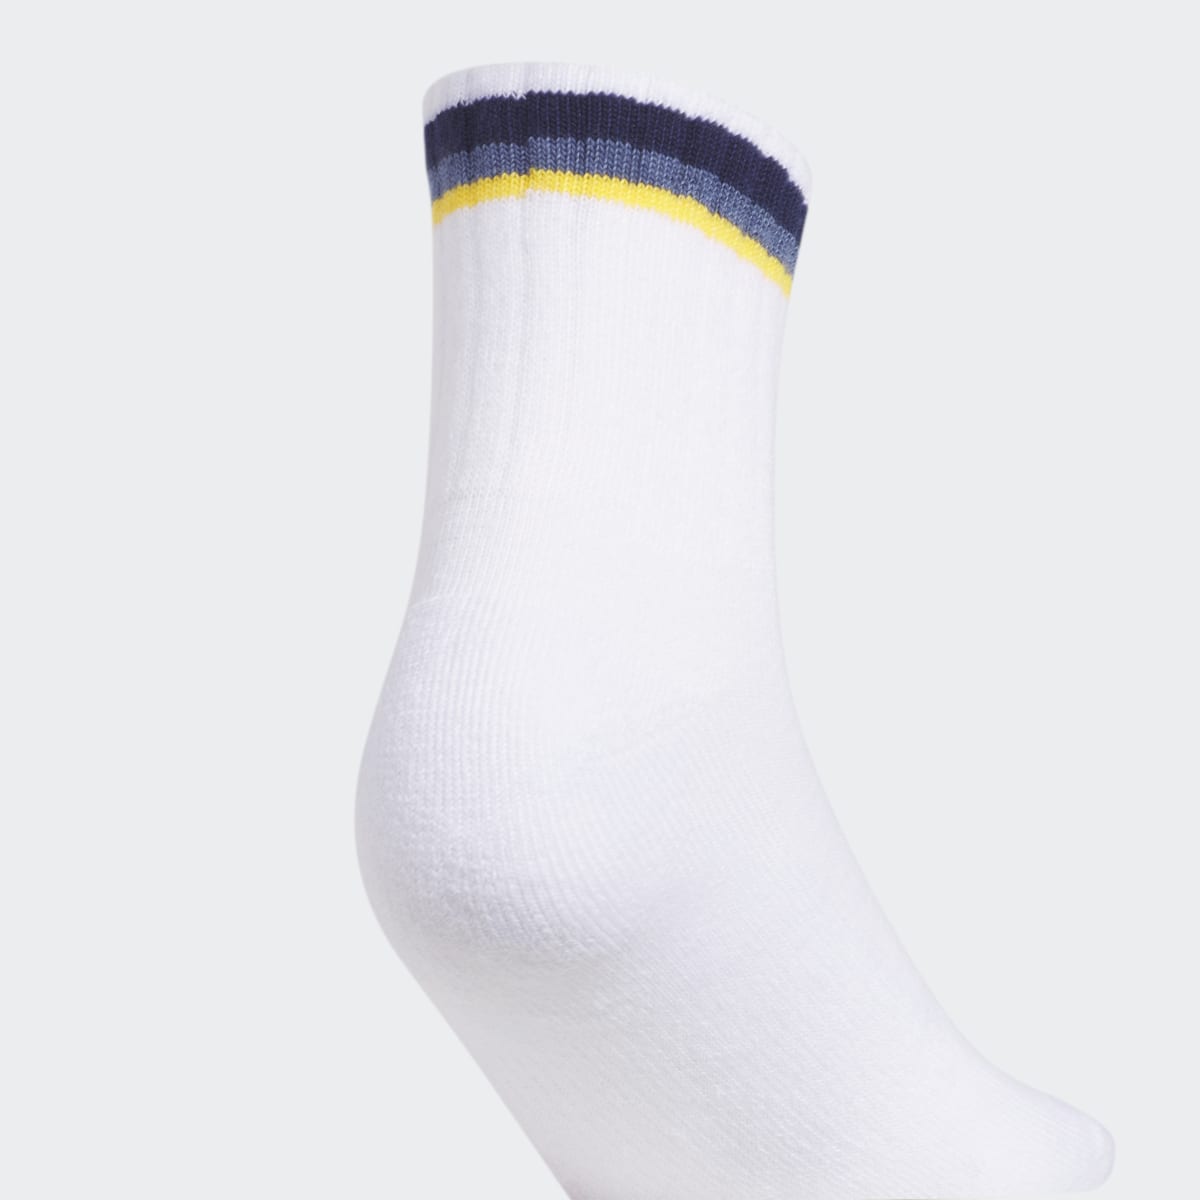 Adidas Ori Aura Socks 3 Pairs. 5